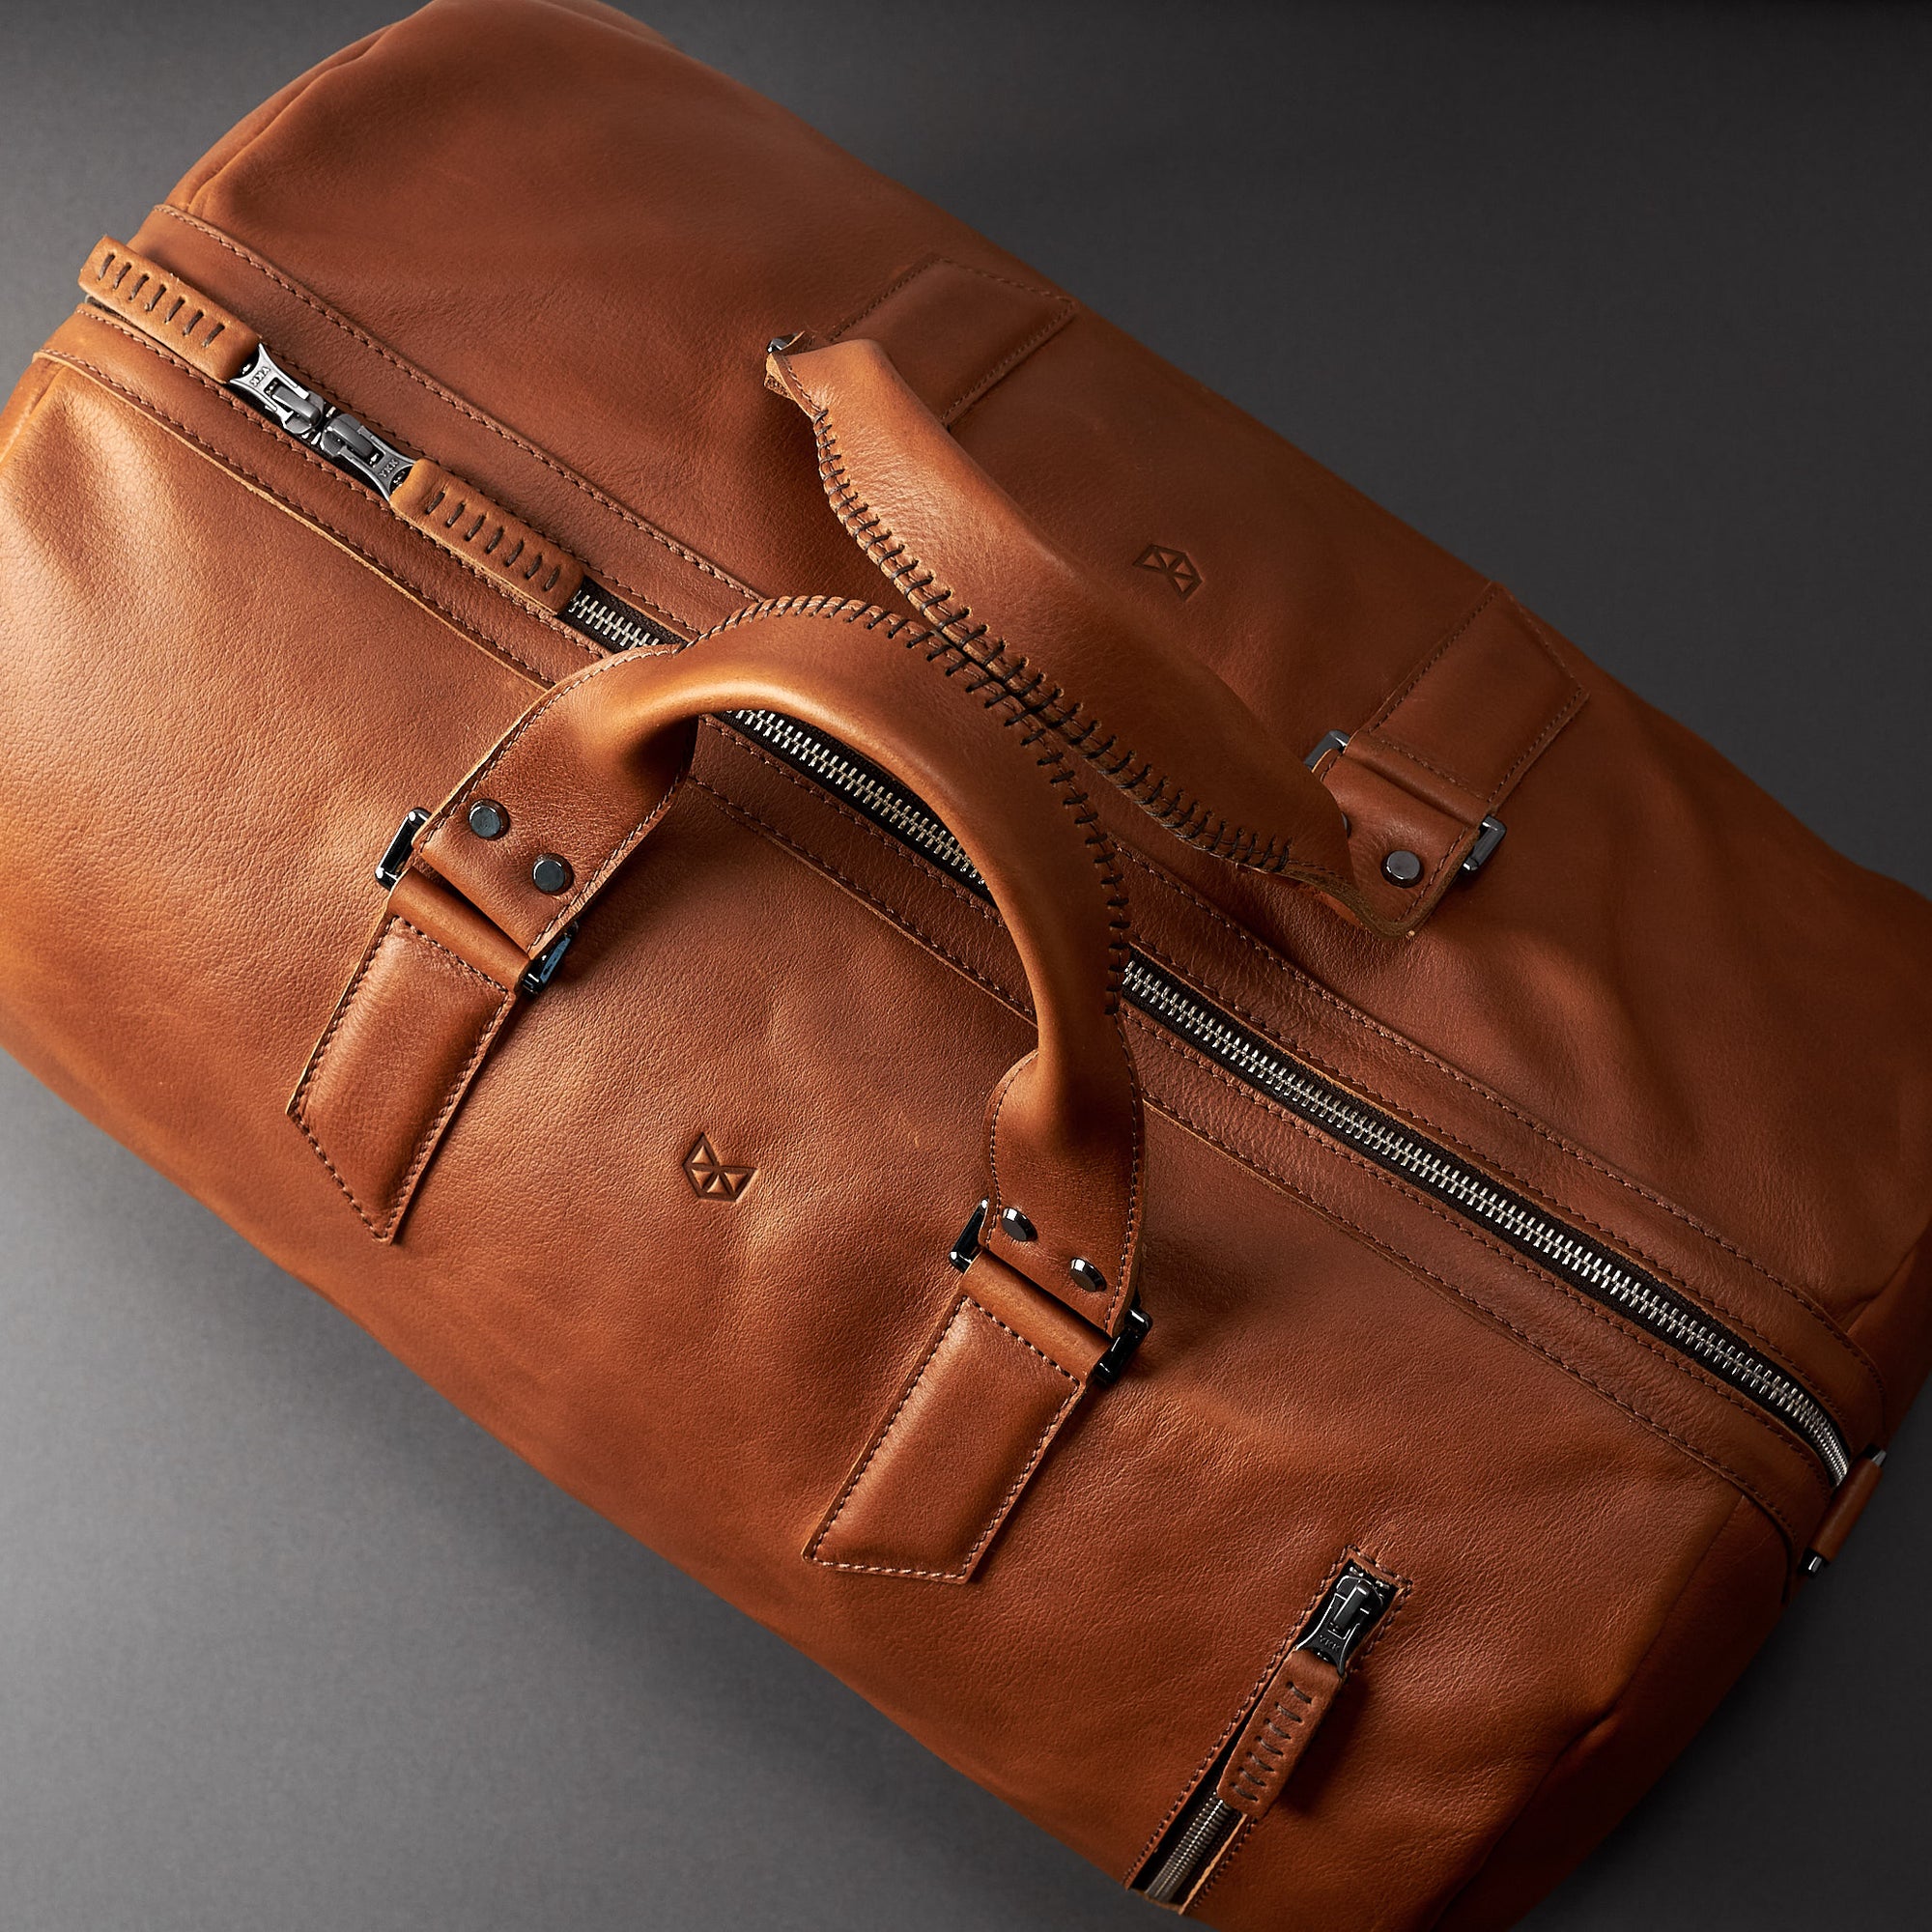 Style. Tan leather weekender bag. Travel carryall mens bag